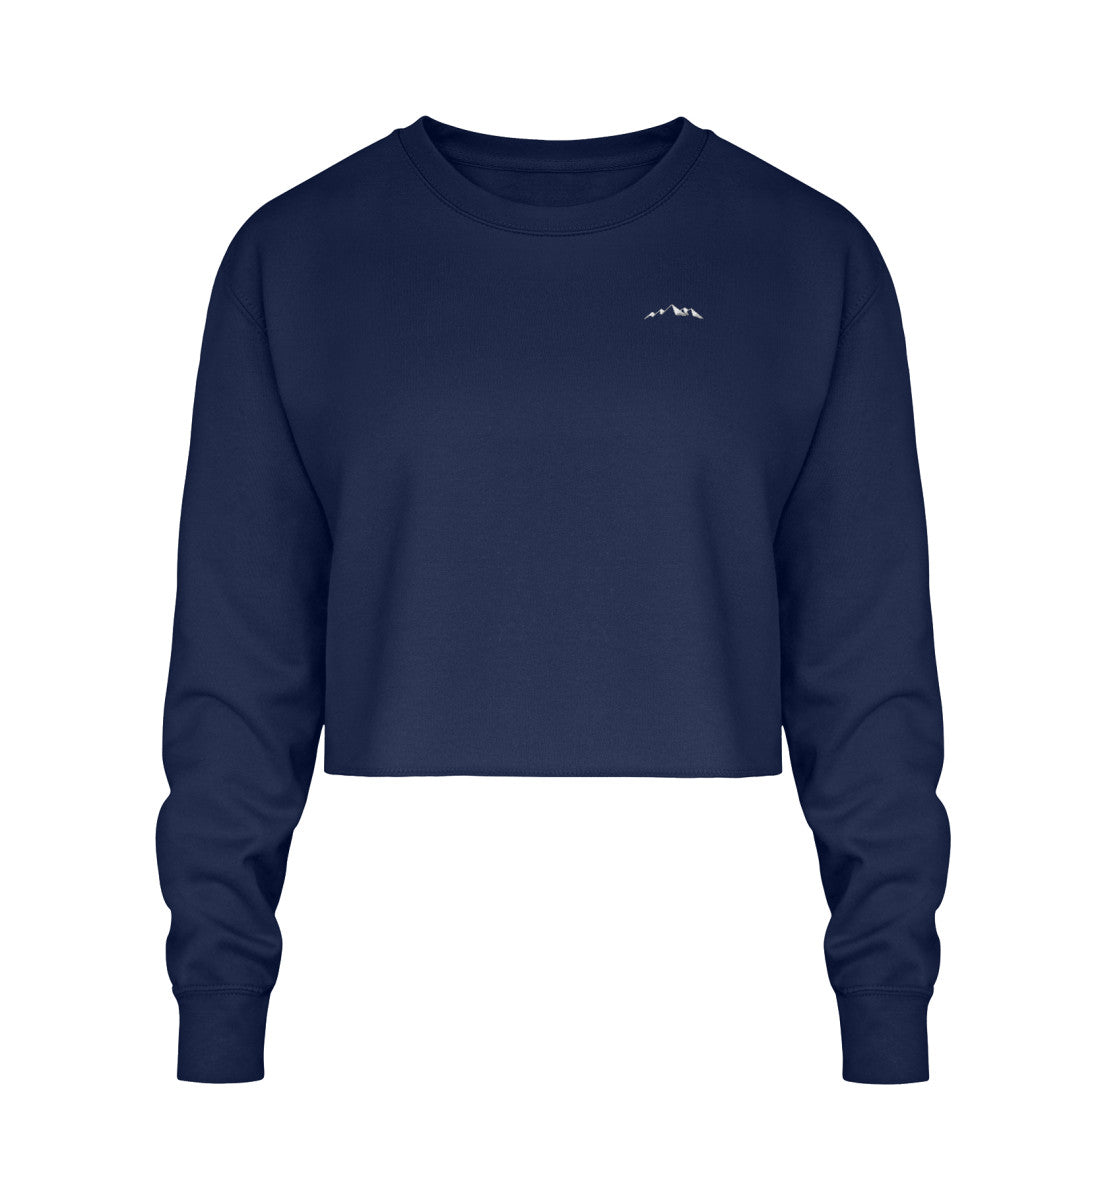 ALPENX ACTIVE Collection - Crop Sweater (Stick)